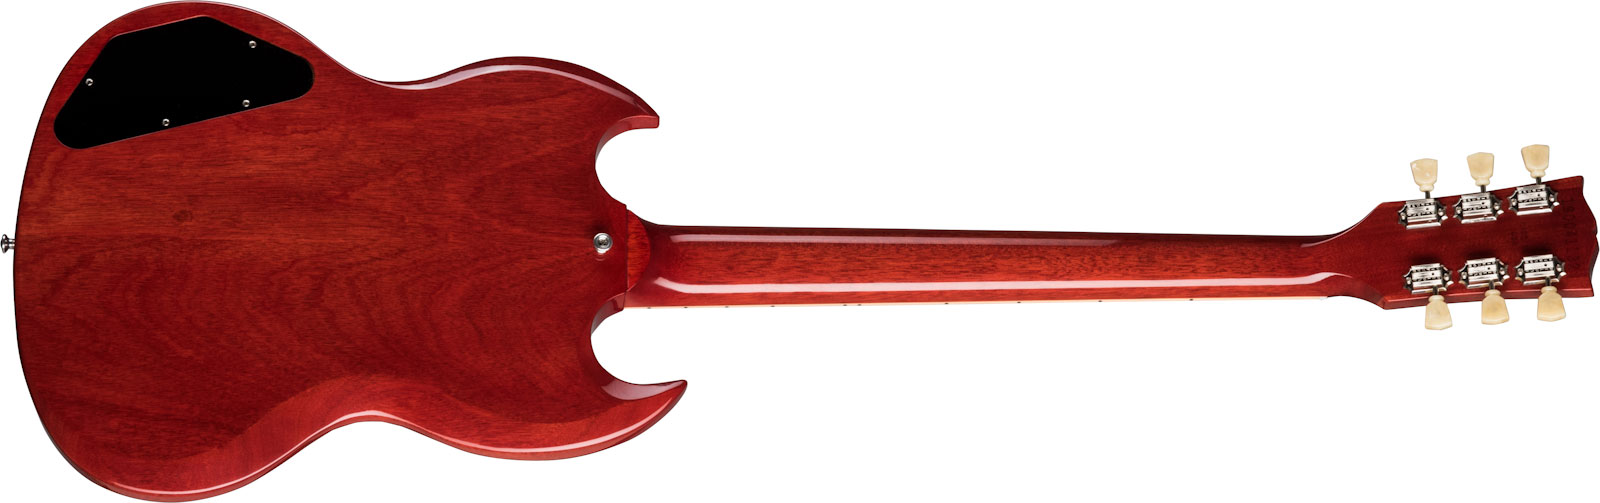 Gibson Sg Standard '61 2h Ht Rw - Vintage Cherry - Retro rock electric guitar - Variation 1